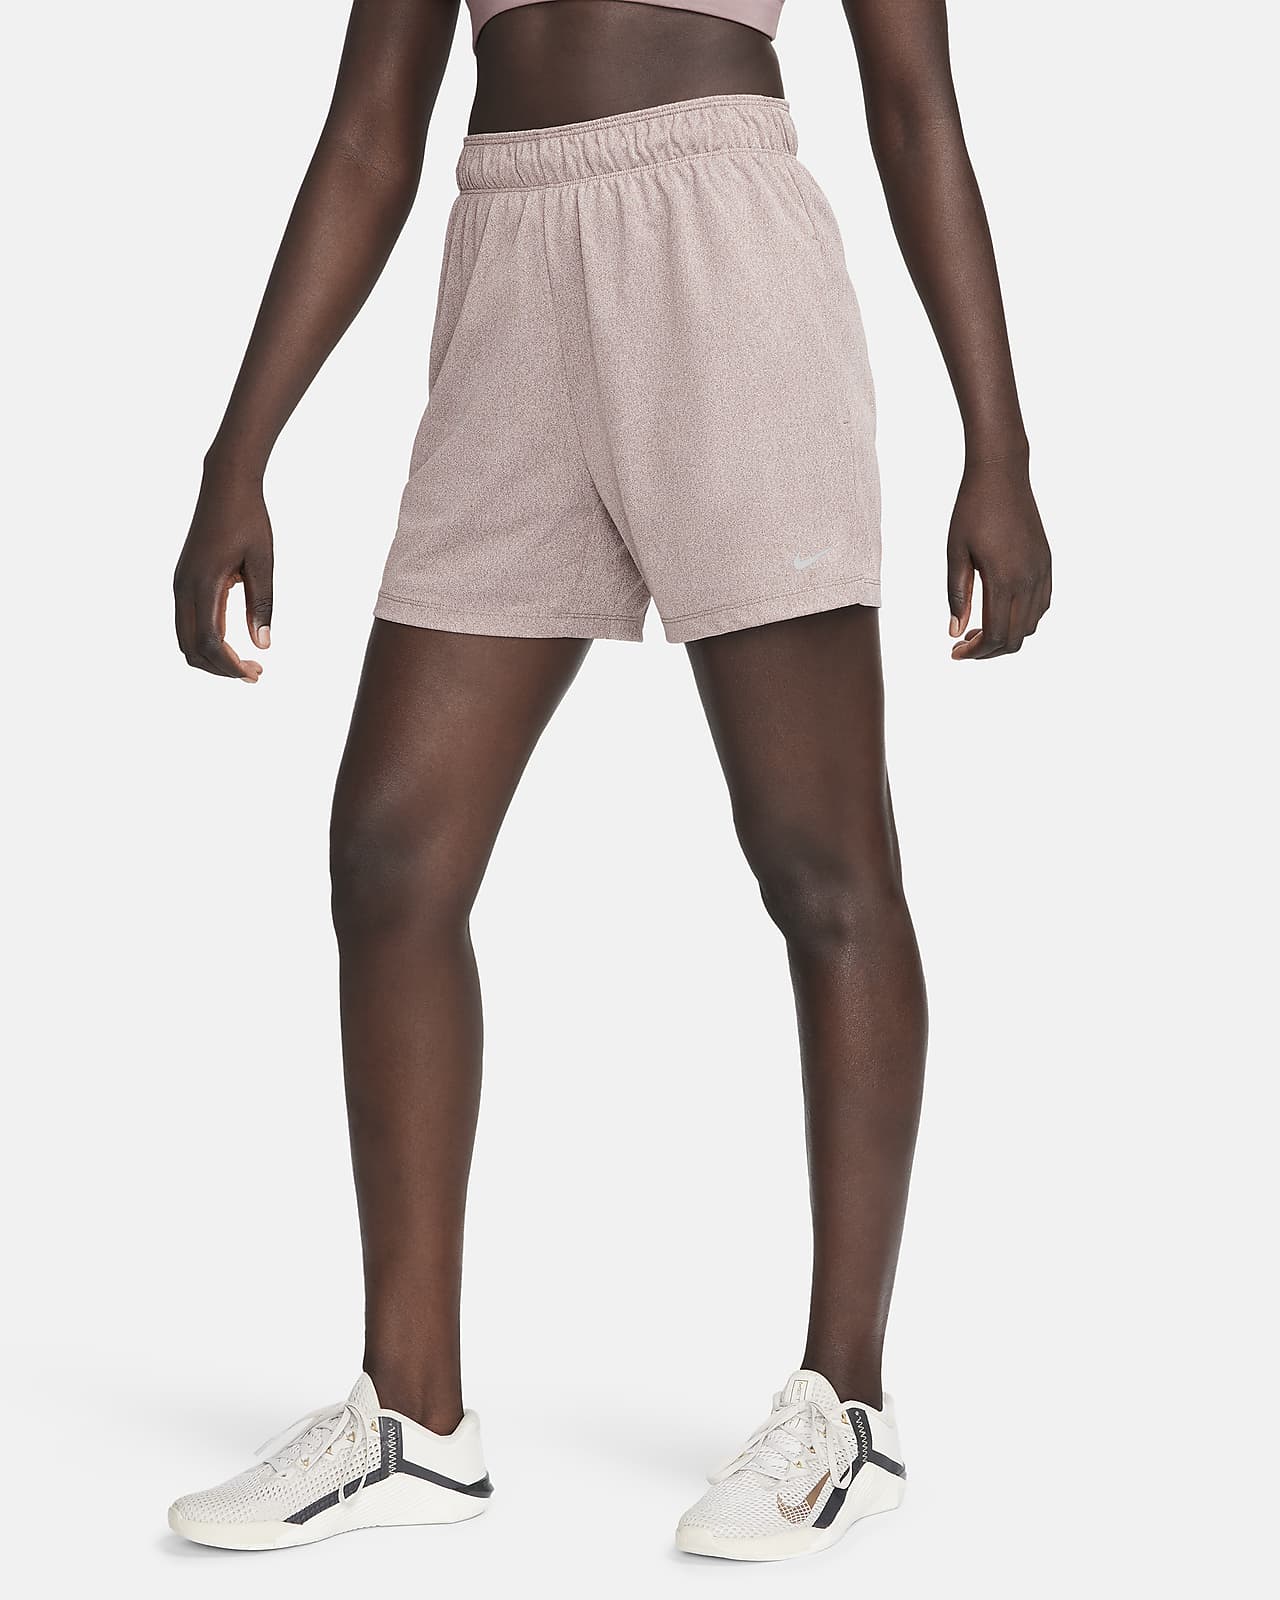 Nike Attack ongevoerde fitnesshorts met Dri-FIT en halfhoge taille voor dames (13 cm)